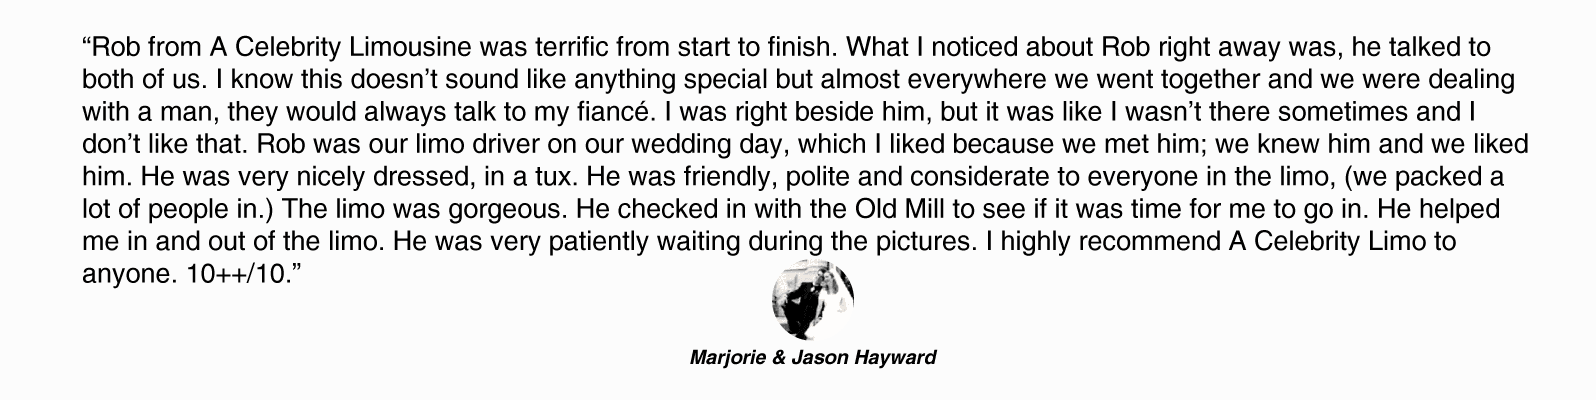 Jason Hayward